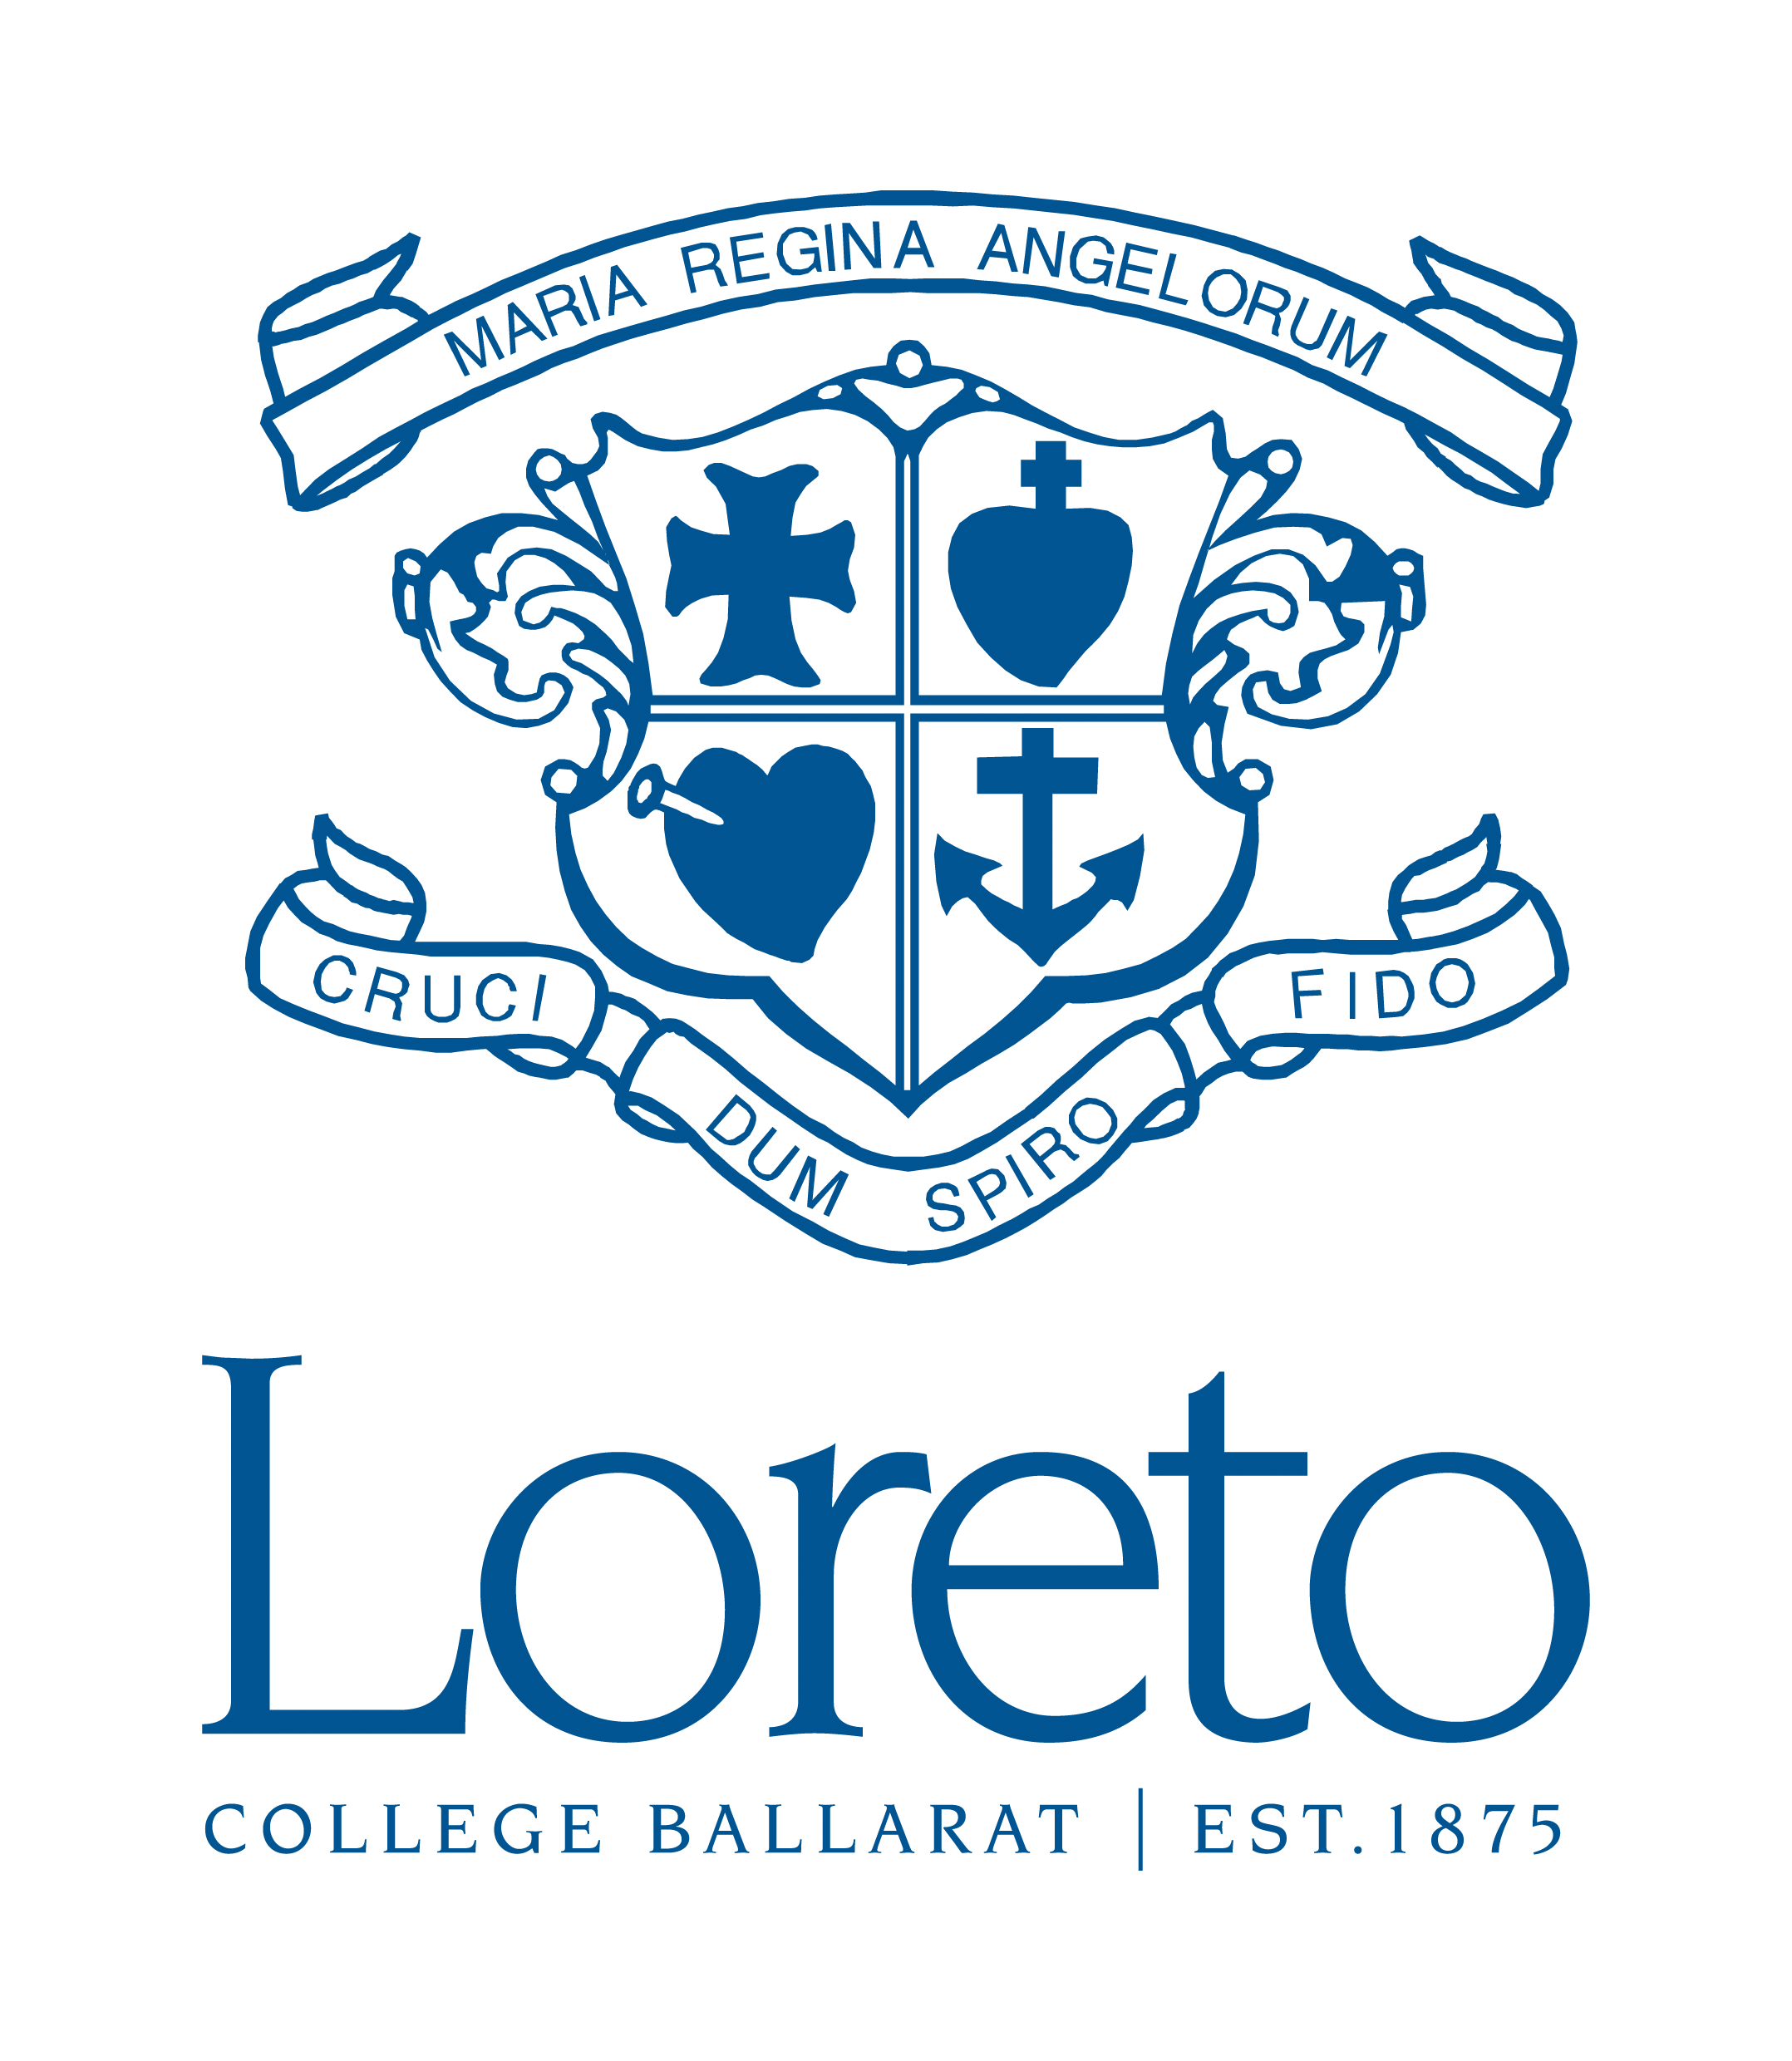 Loreto College Ballarat, Ballarat, VIC